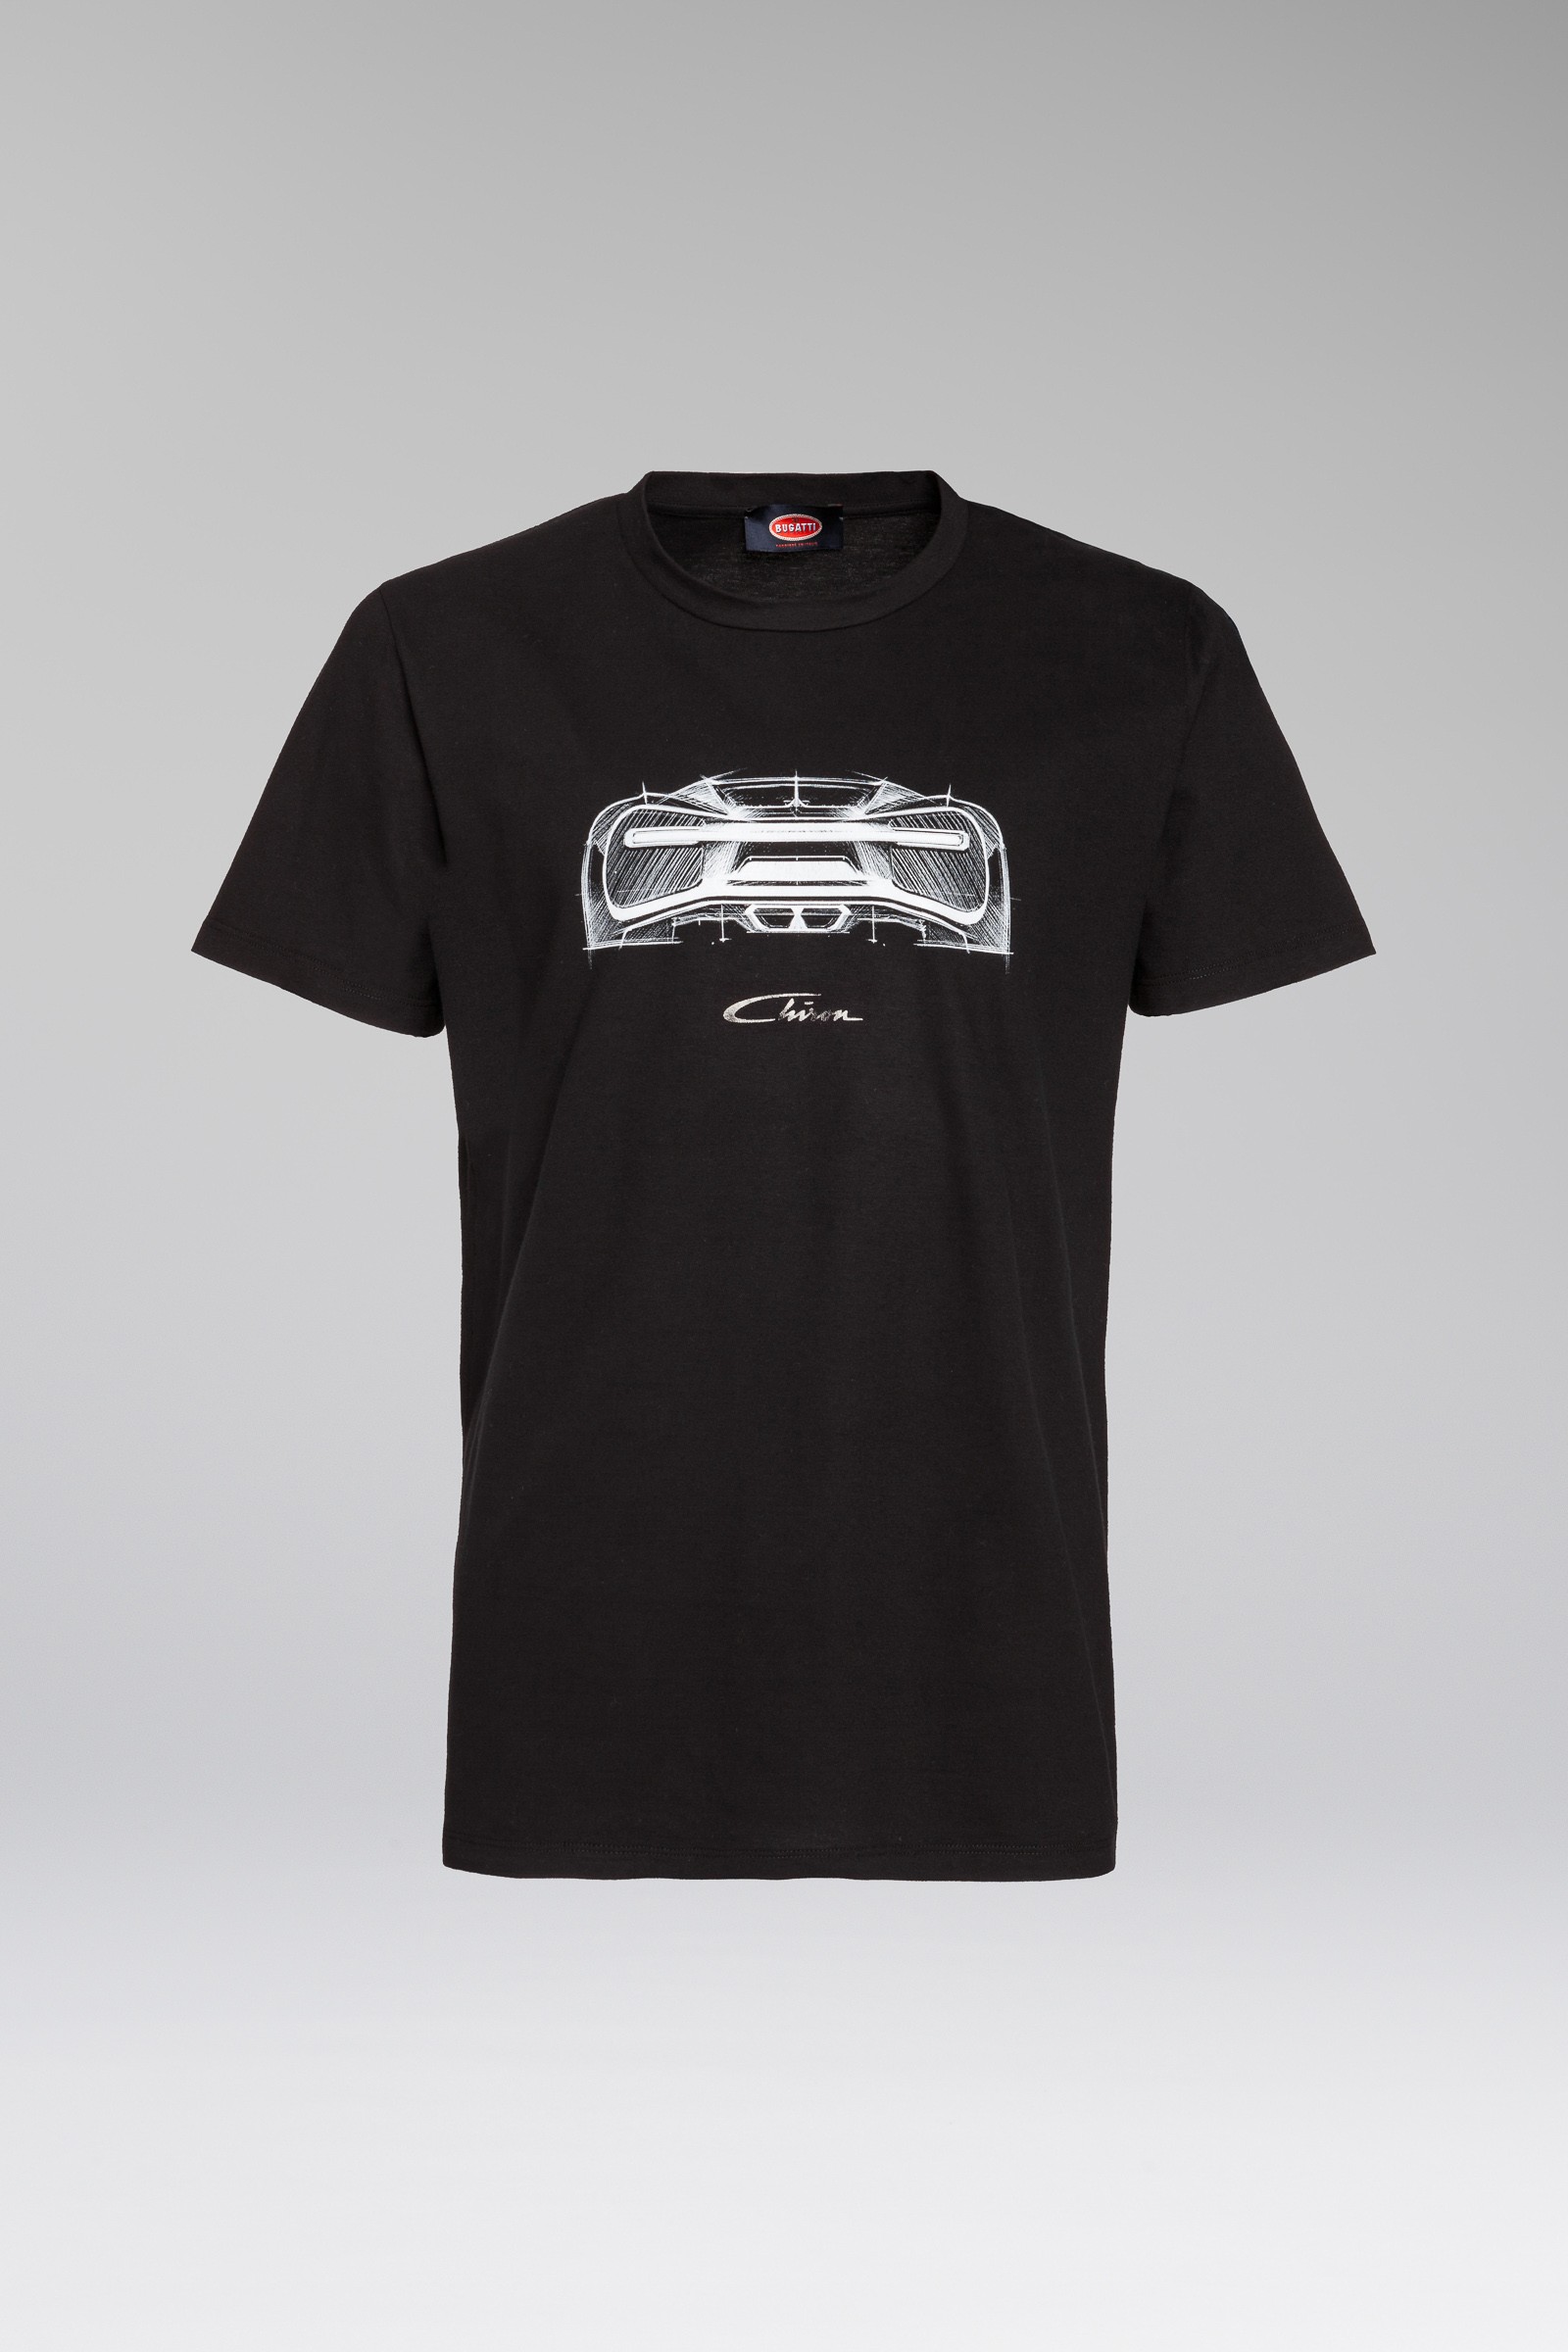 Black Chiron T-Shirt by Bugatti - Choice Gear